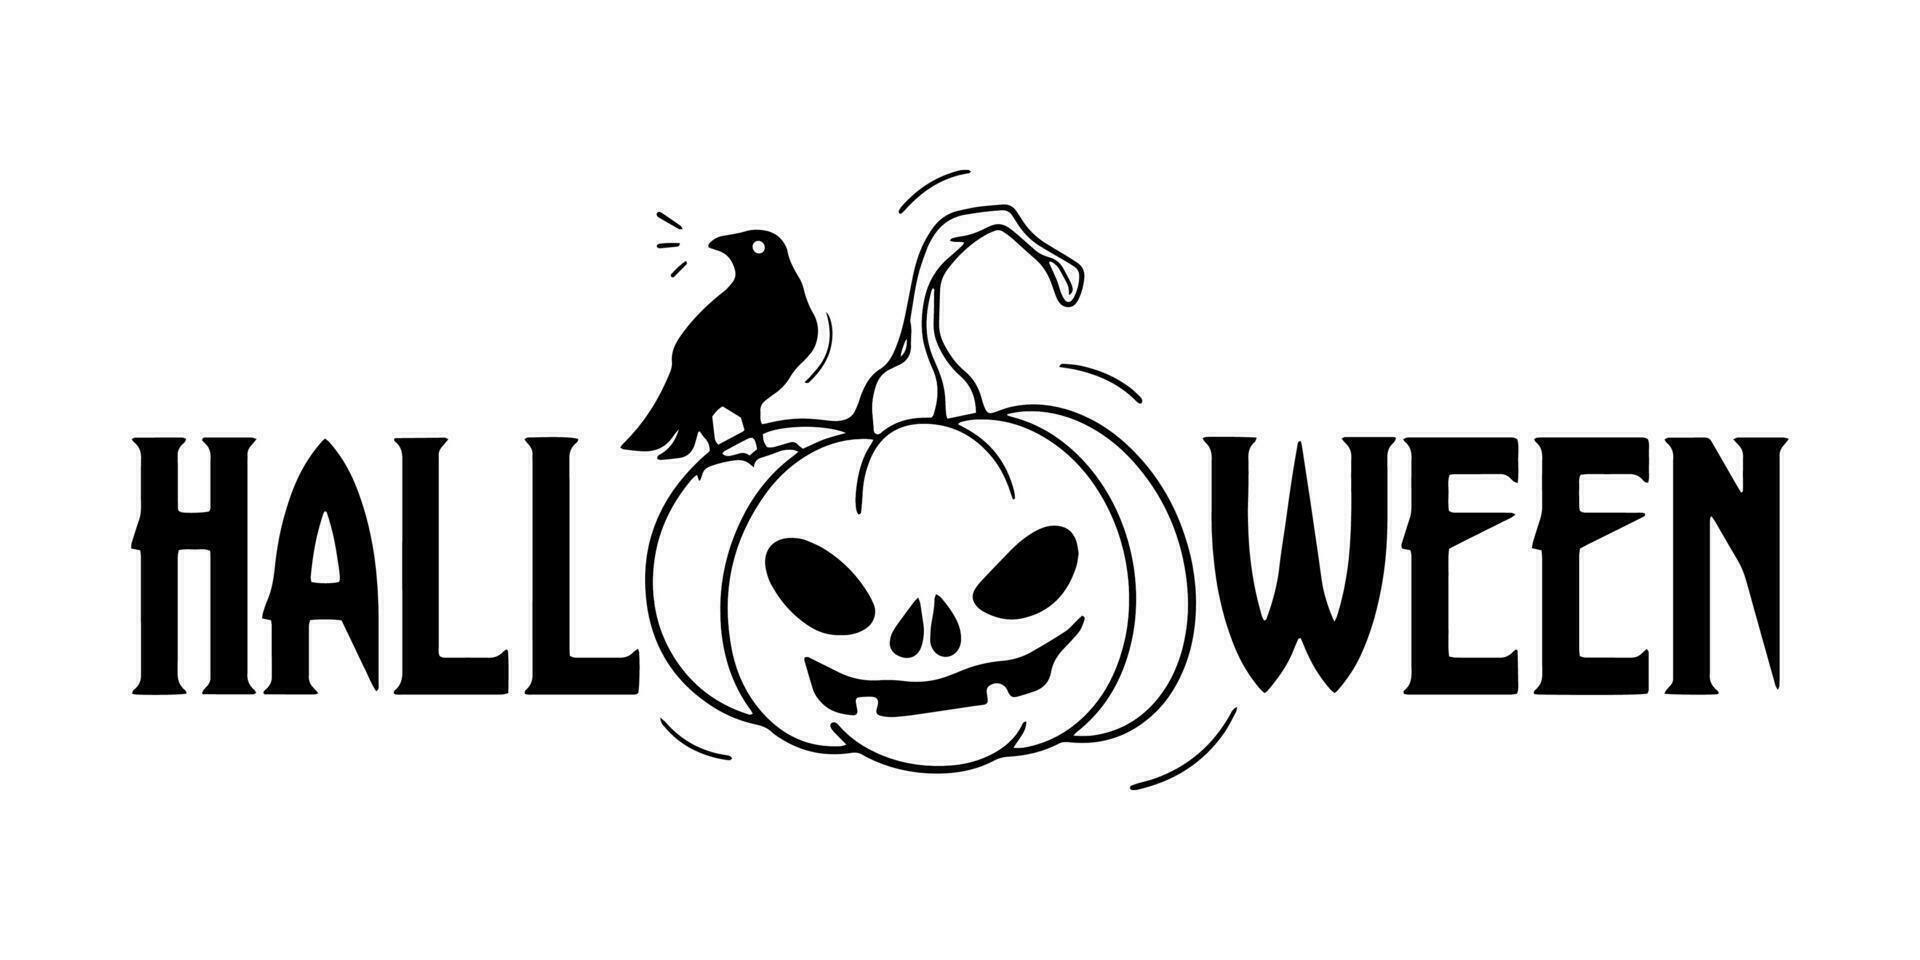 Happy Halloween text art with pumpkin and crow vector